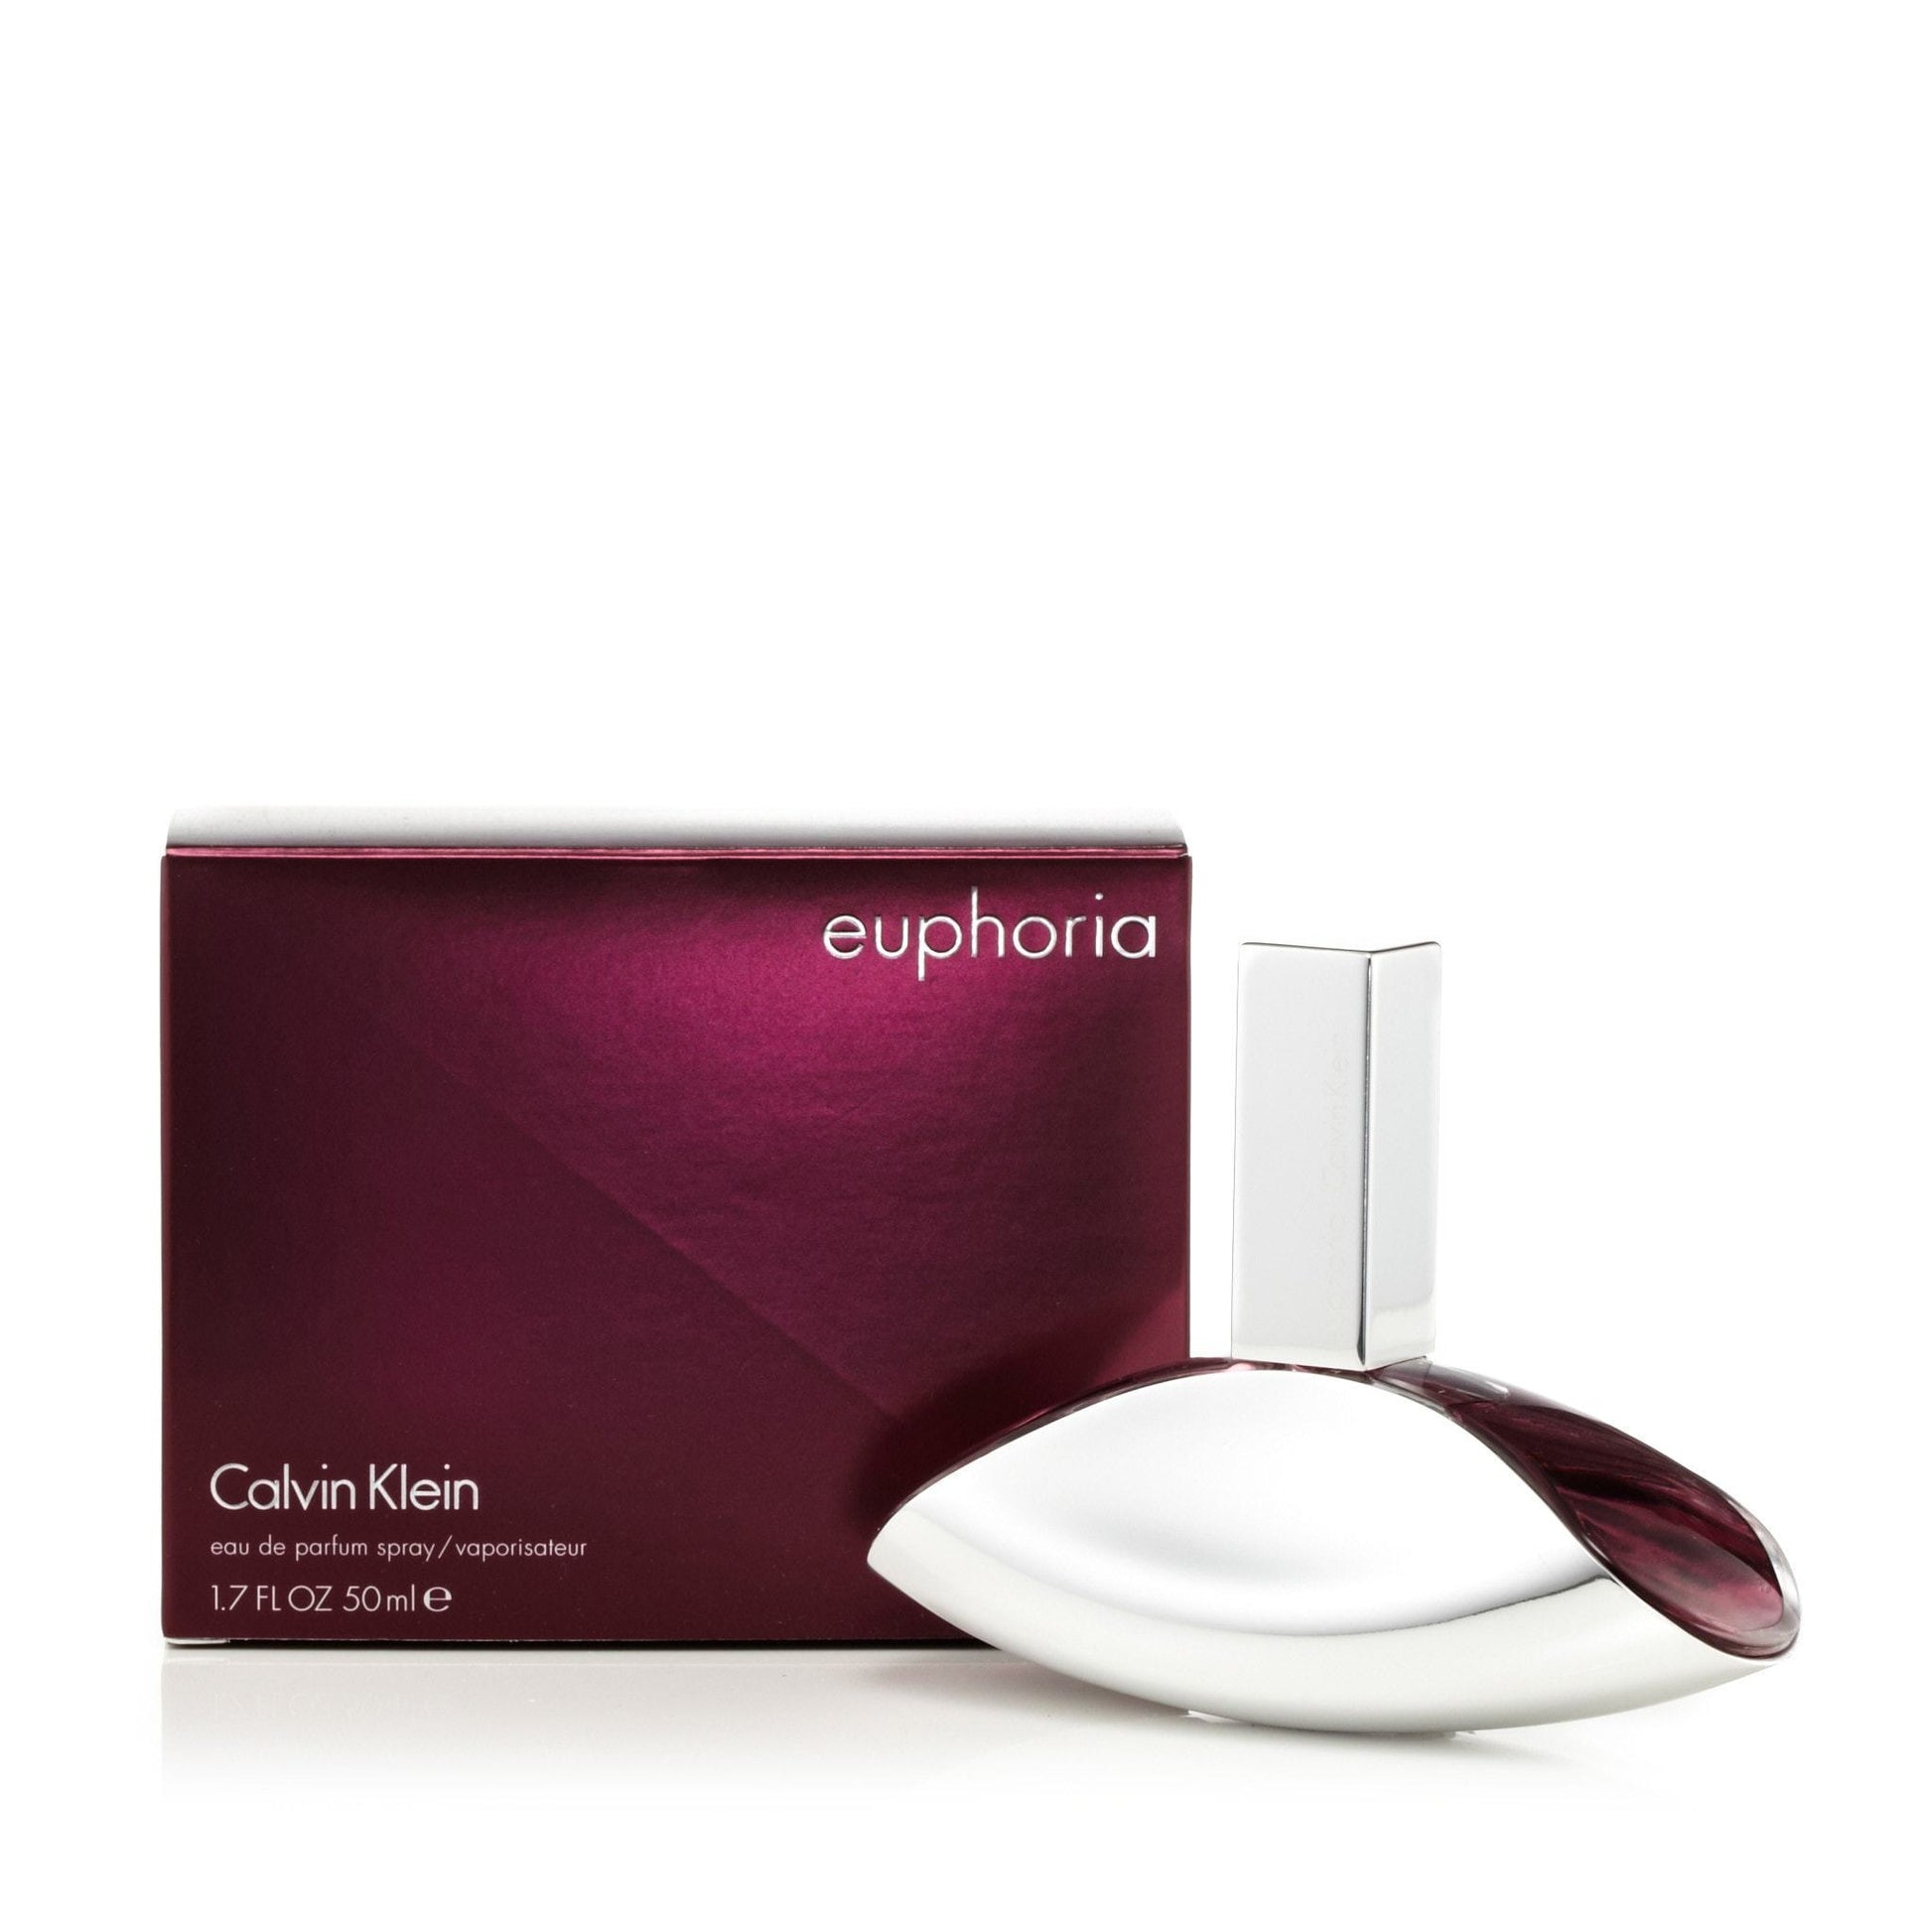 Euphoria Eau de Parfum Spray for Women by Calvin Klein, Product image 5